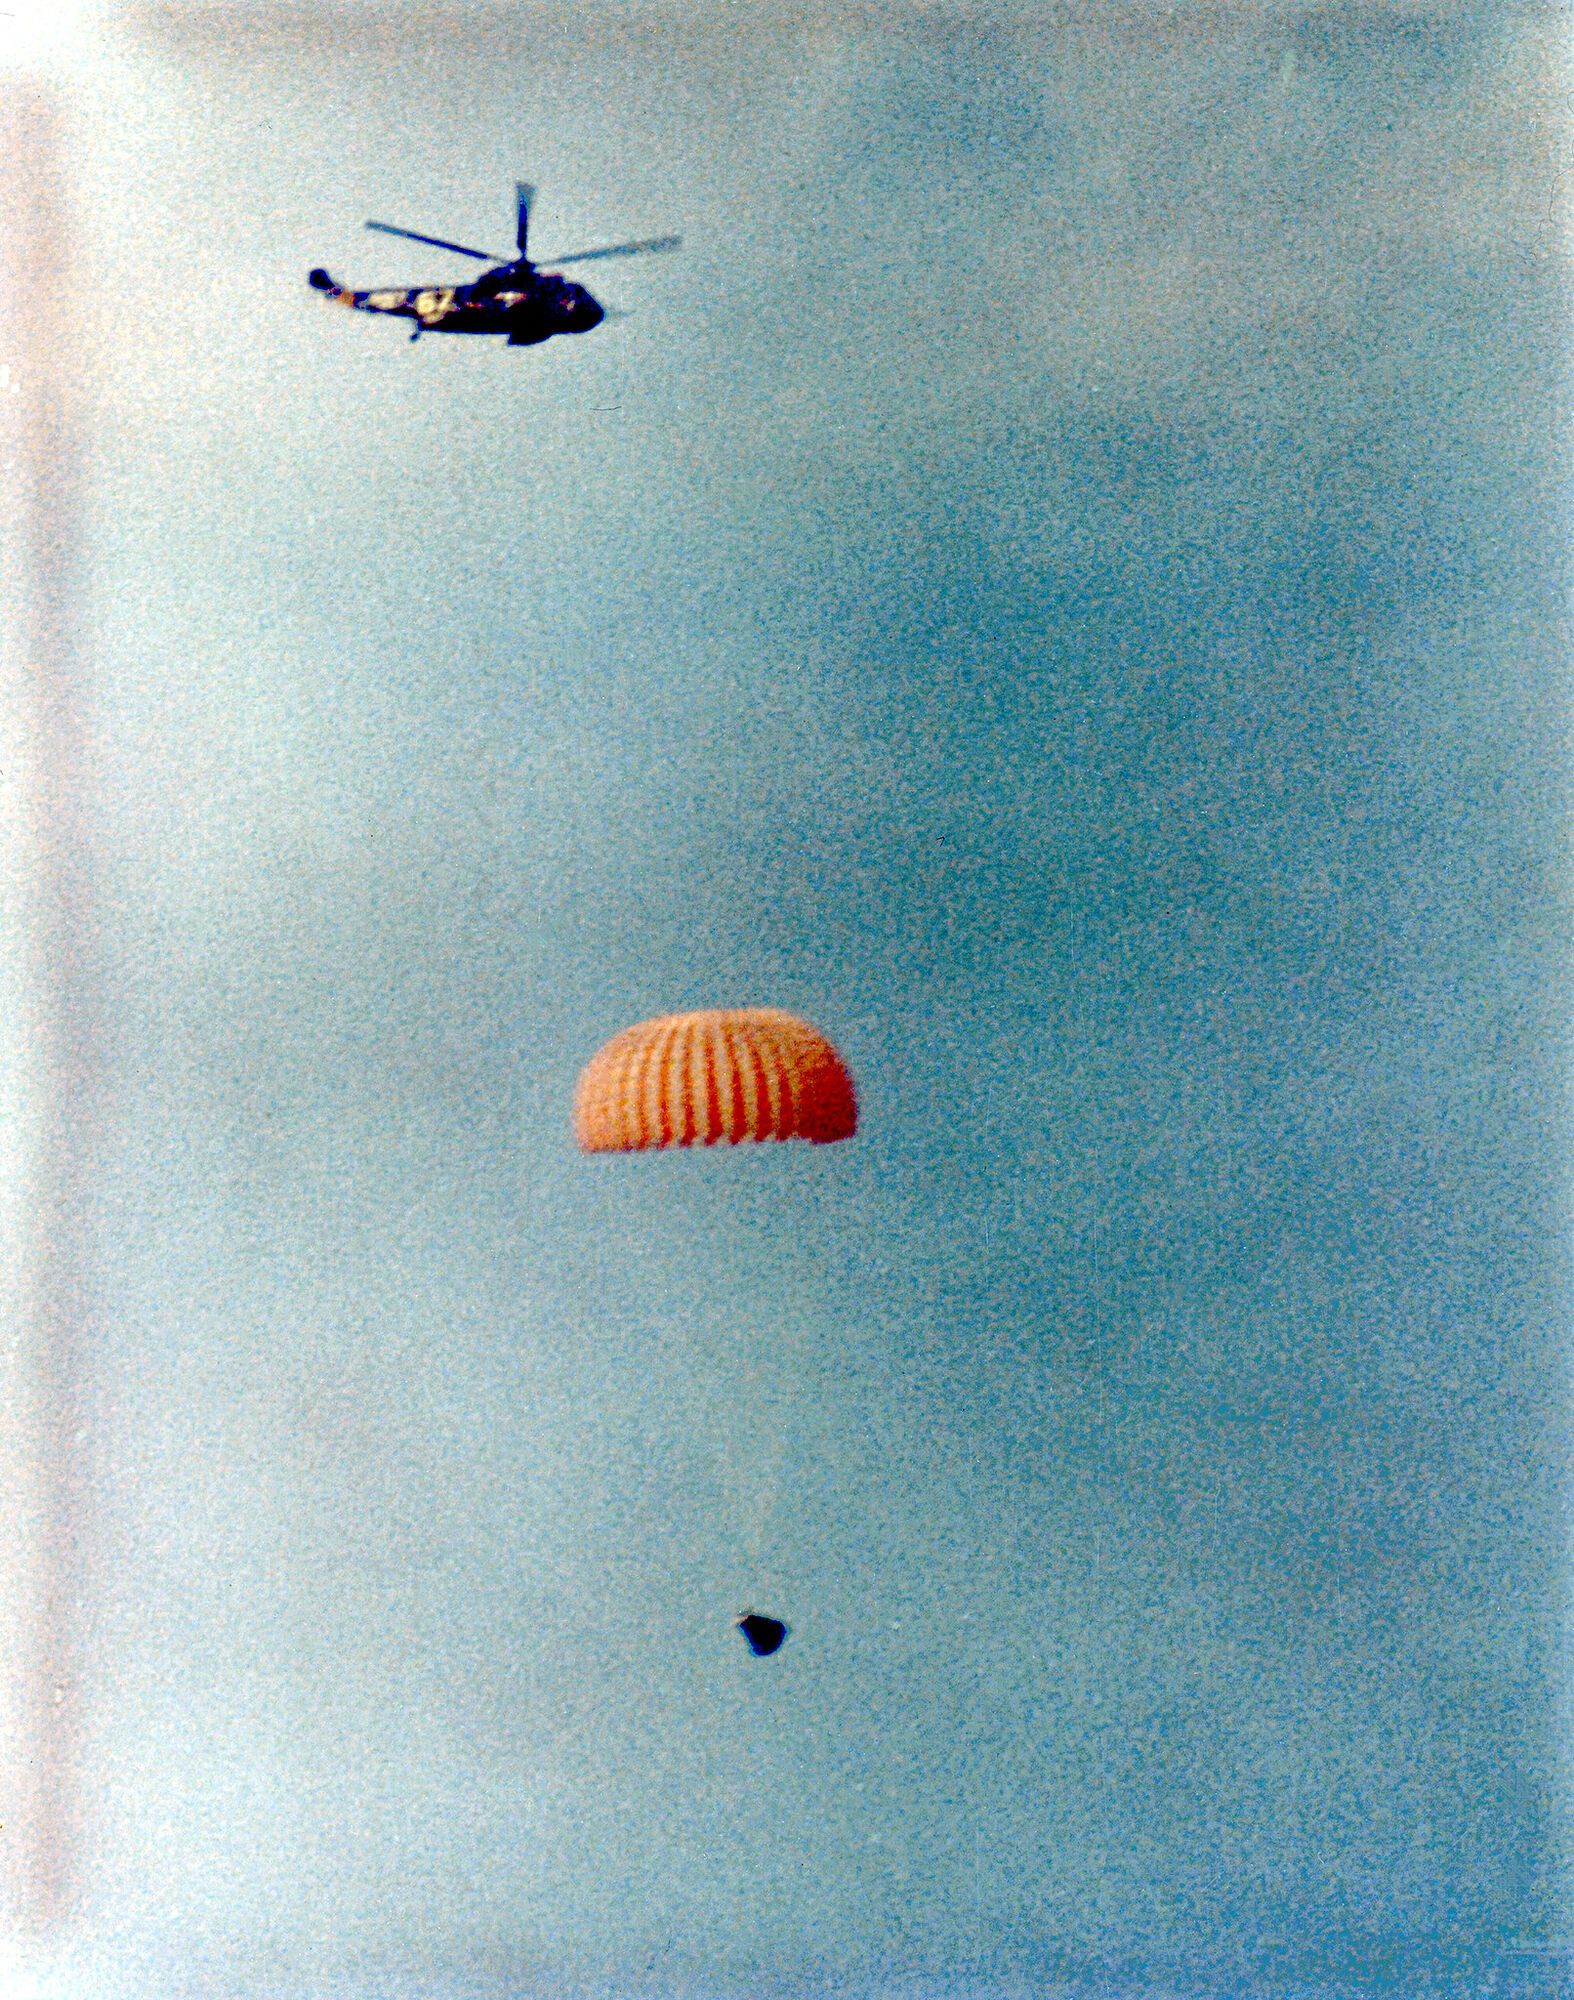 Gemini 12 splashdown